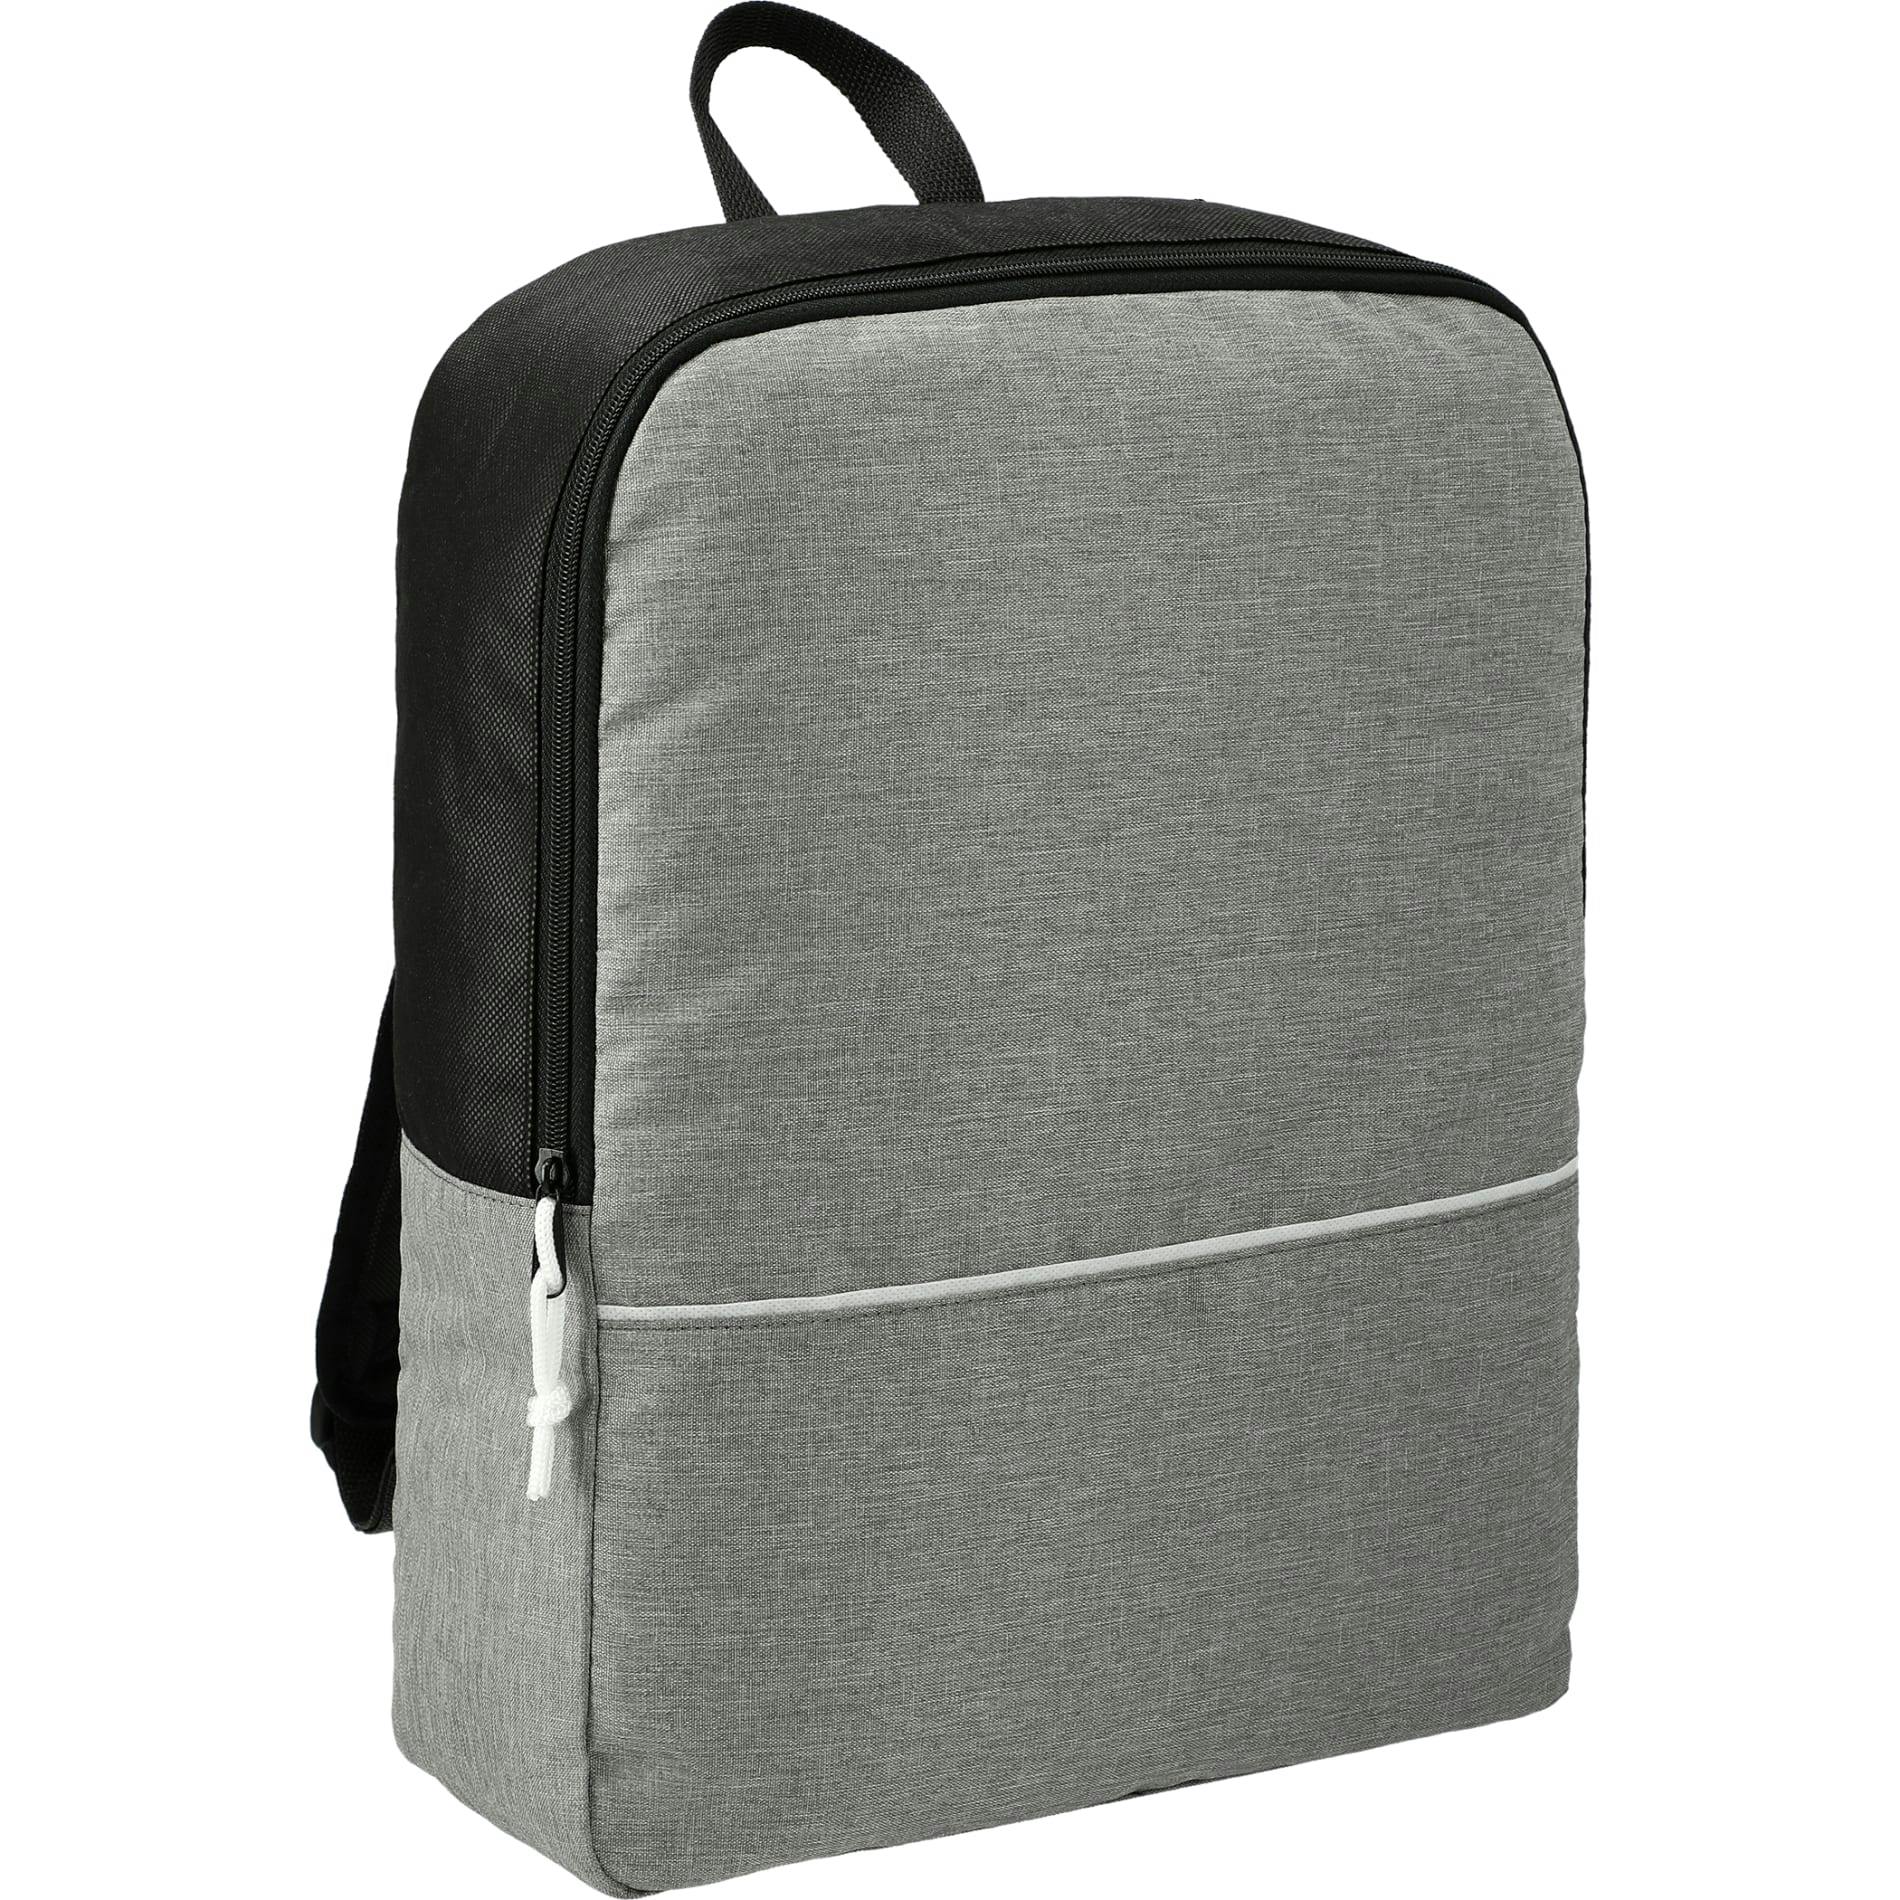 Stone Backpack - additional Image 5